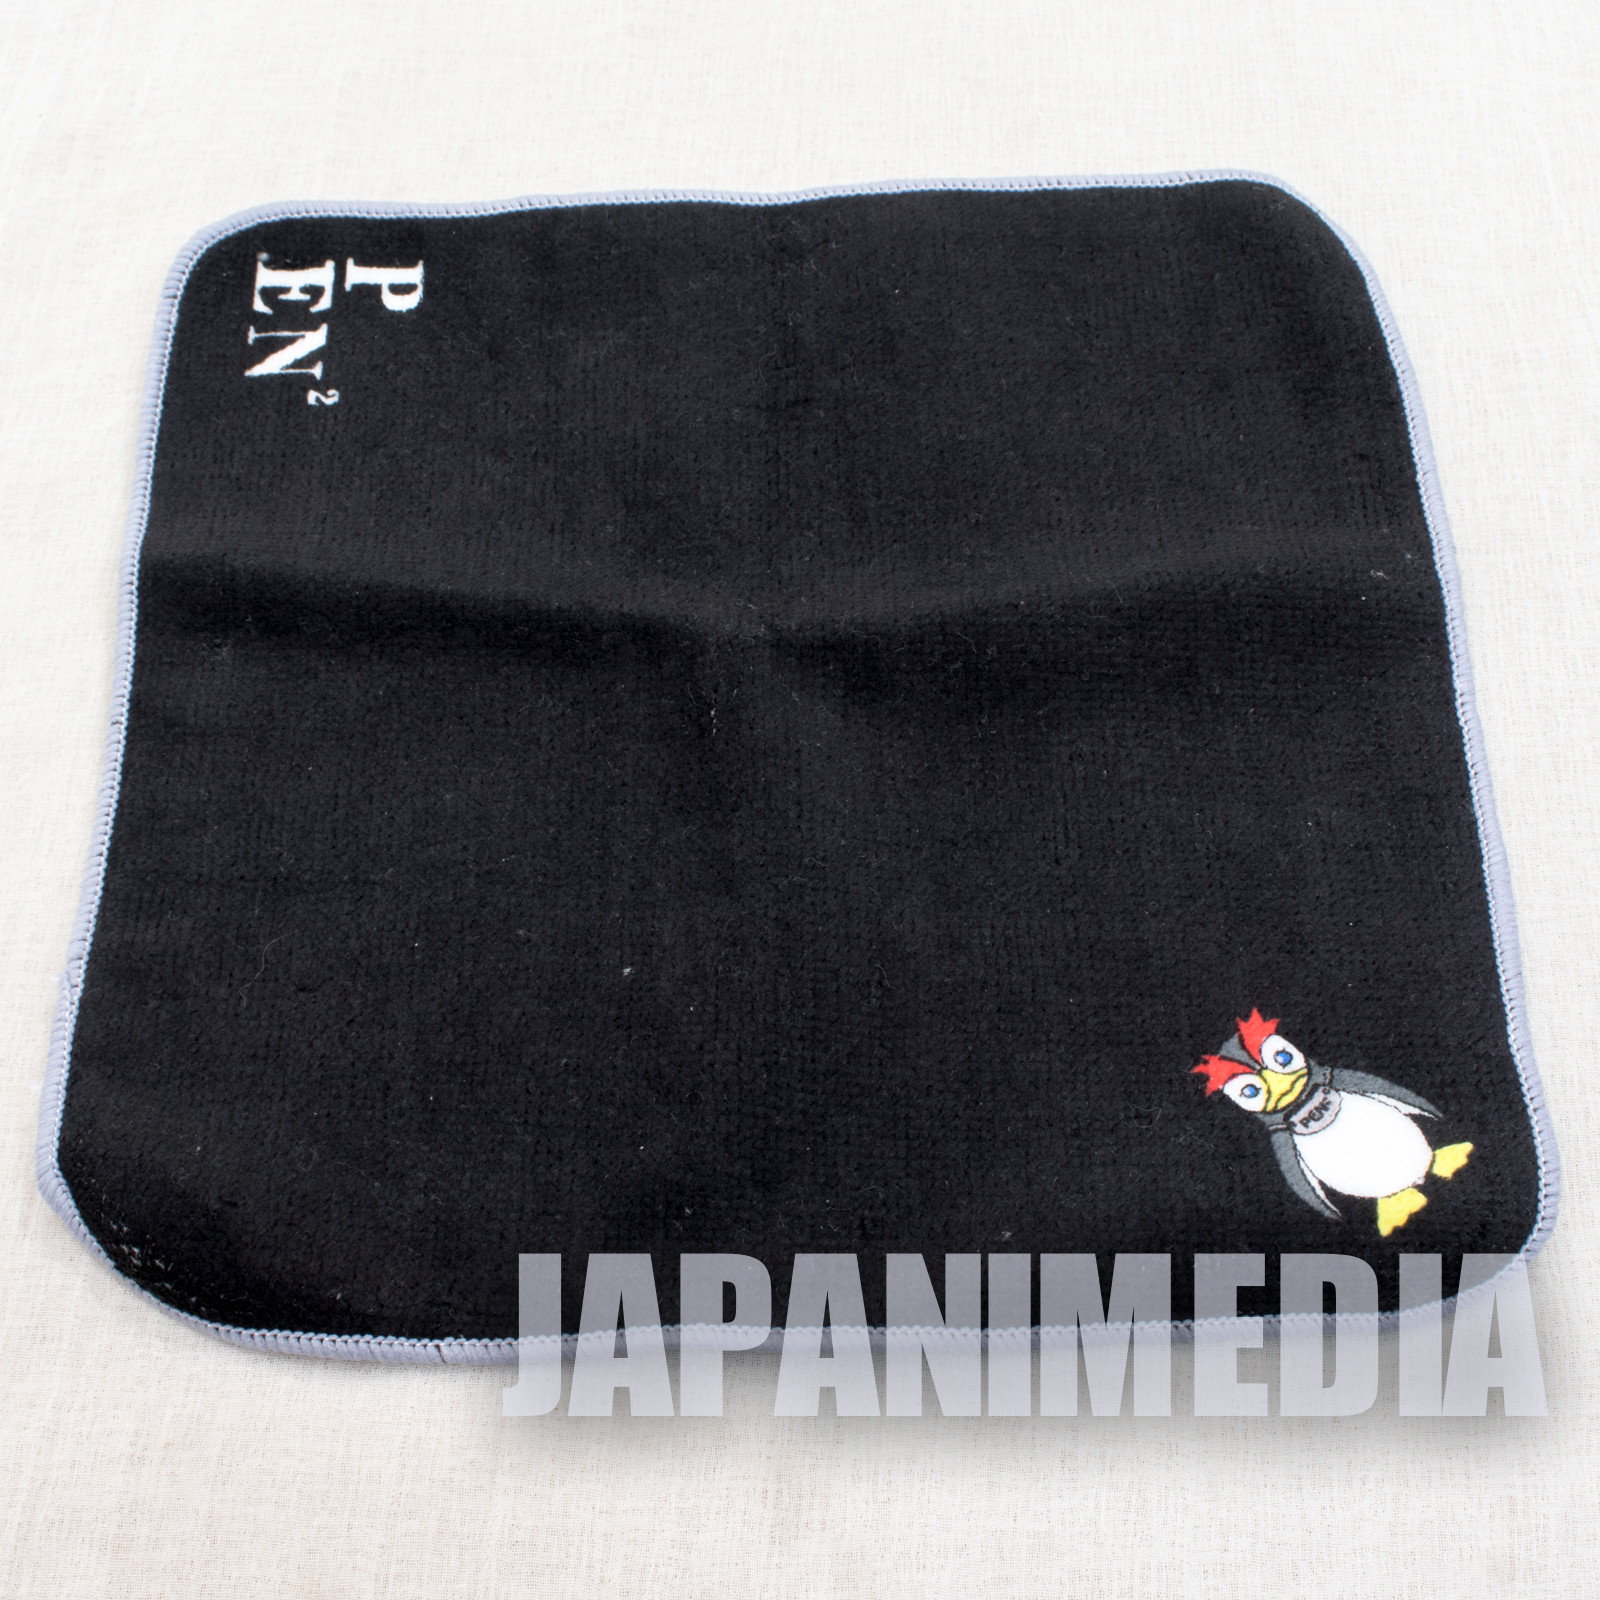 Evangelion PenPen Penguin Hand Towel Set JAPAN ANIME